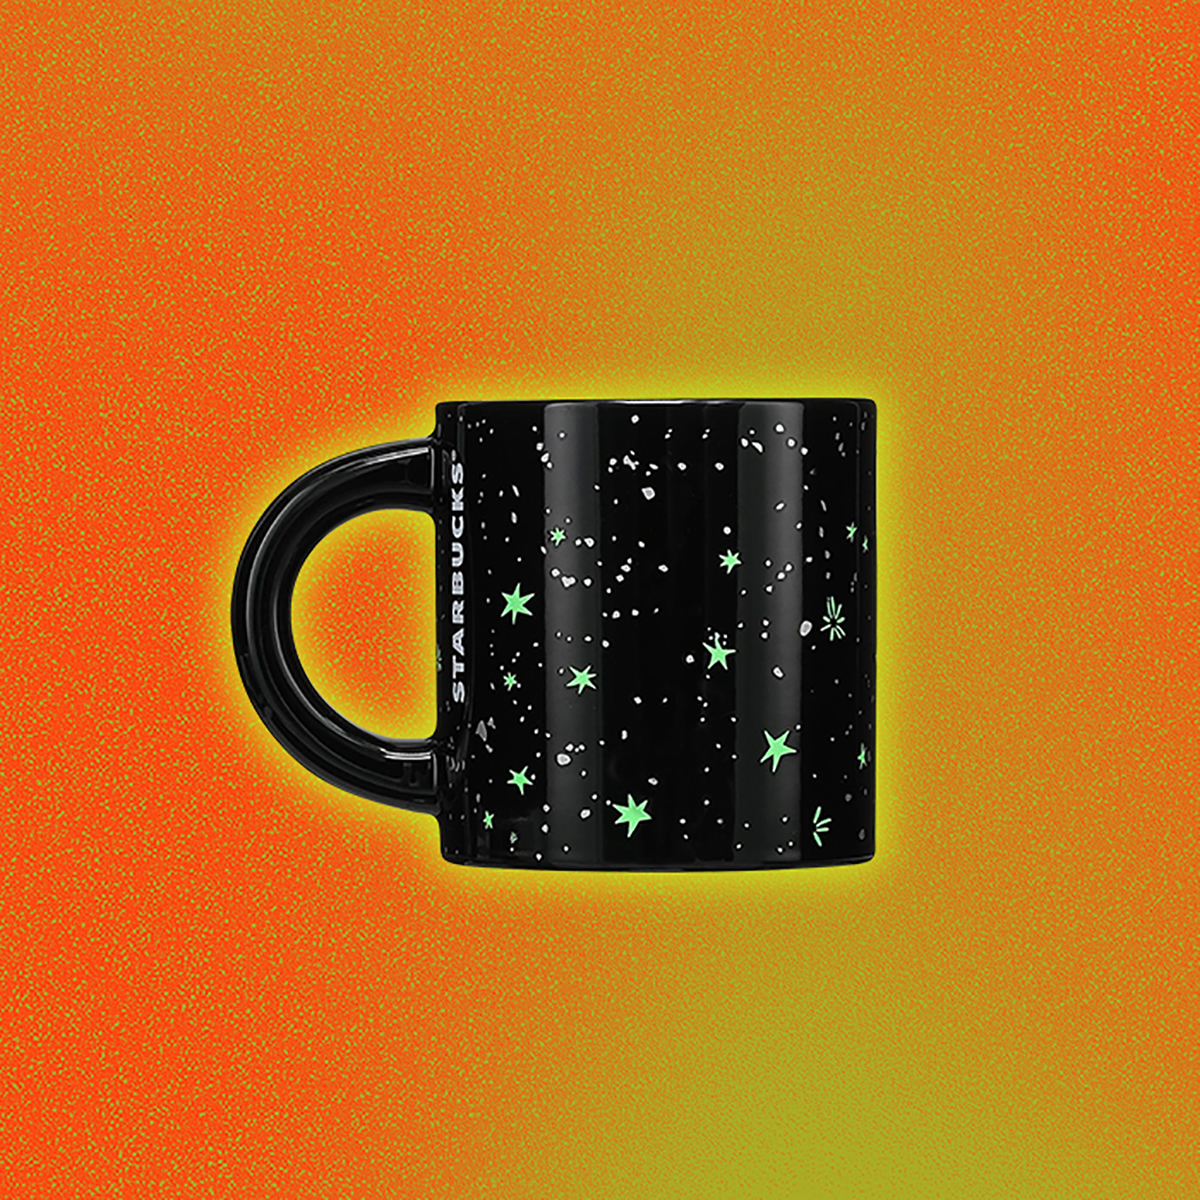 Starbucks Night Sky Glow in the Dark Mug.